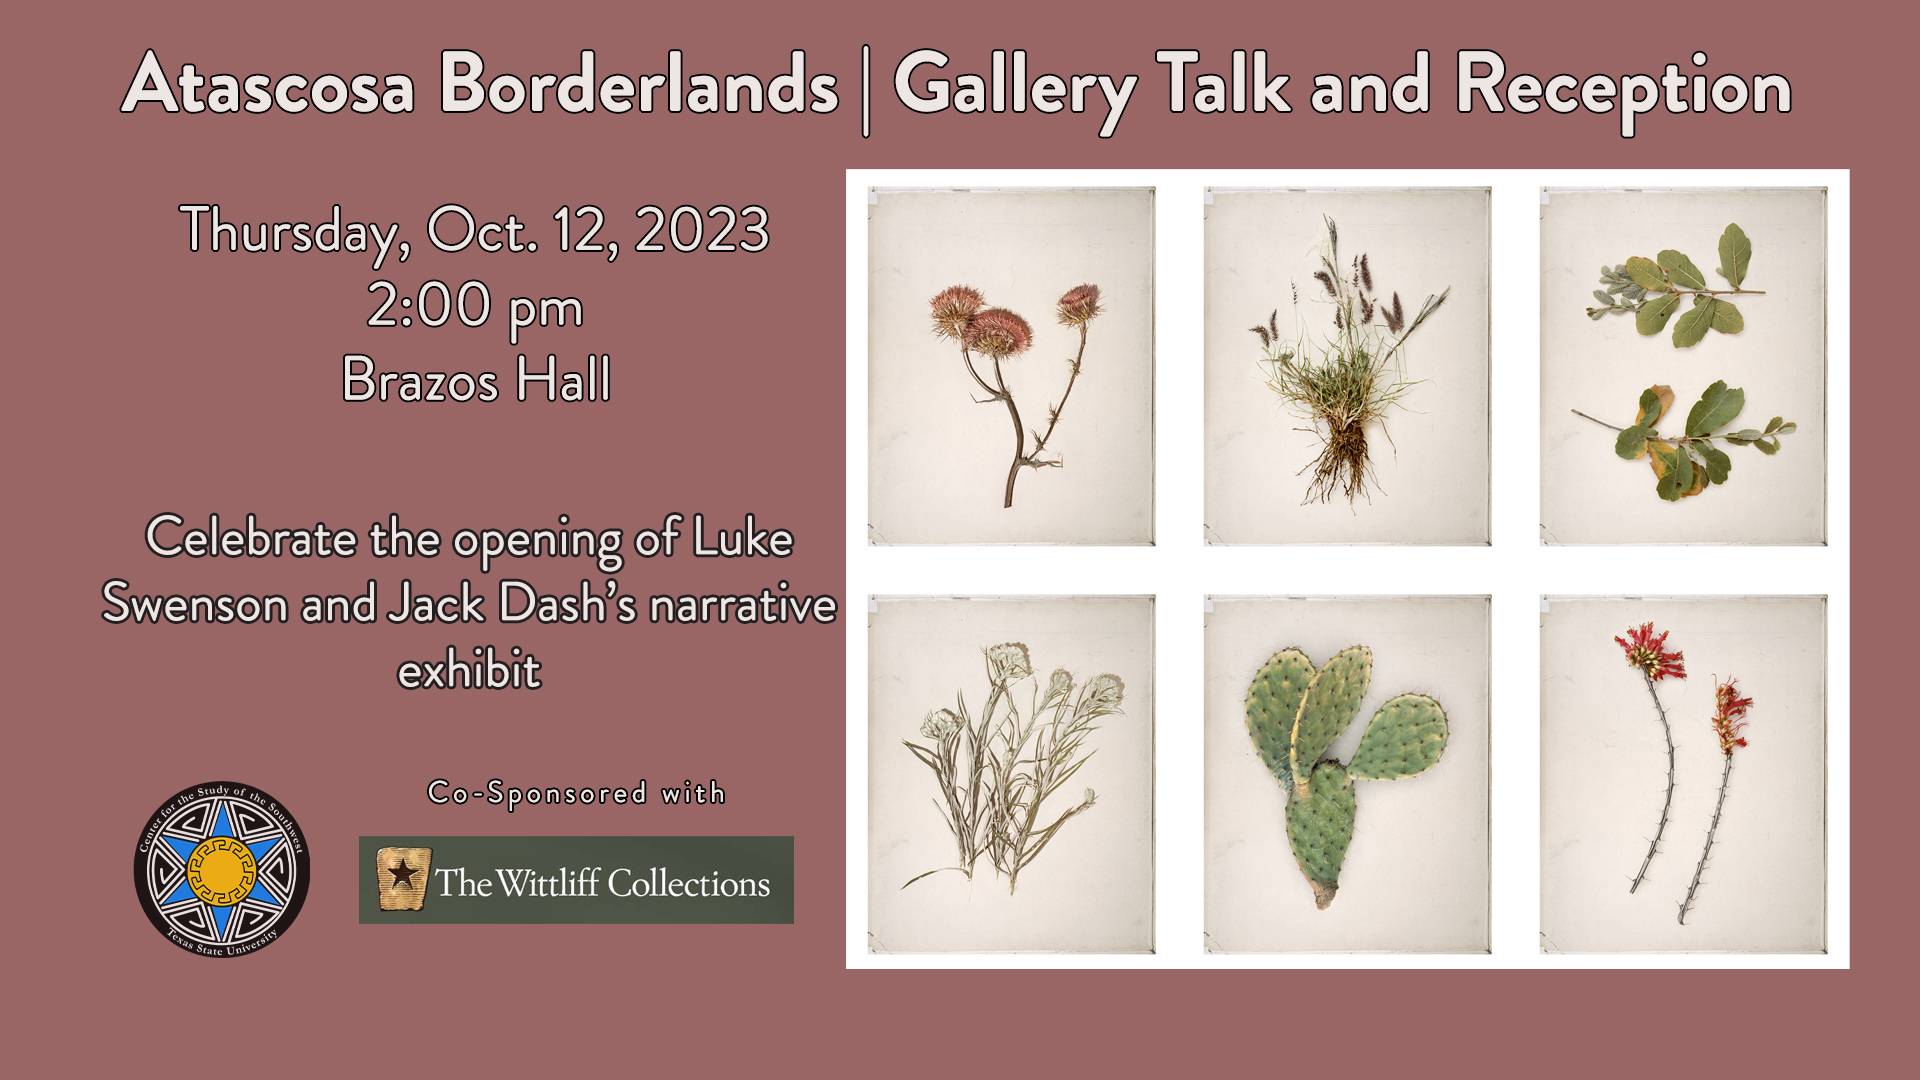 Atascosa Borderlands Gallery Talk and Reception 